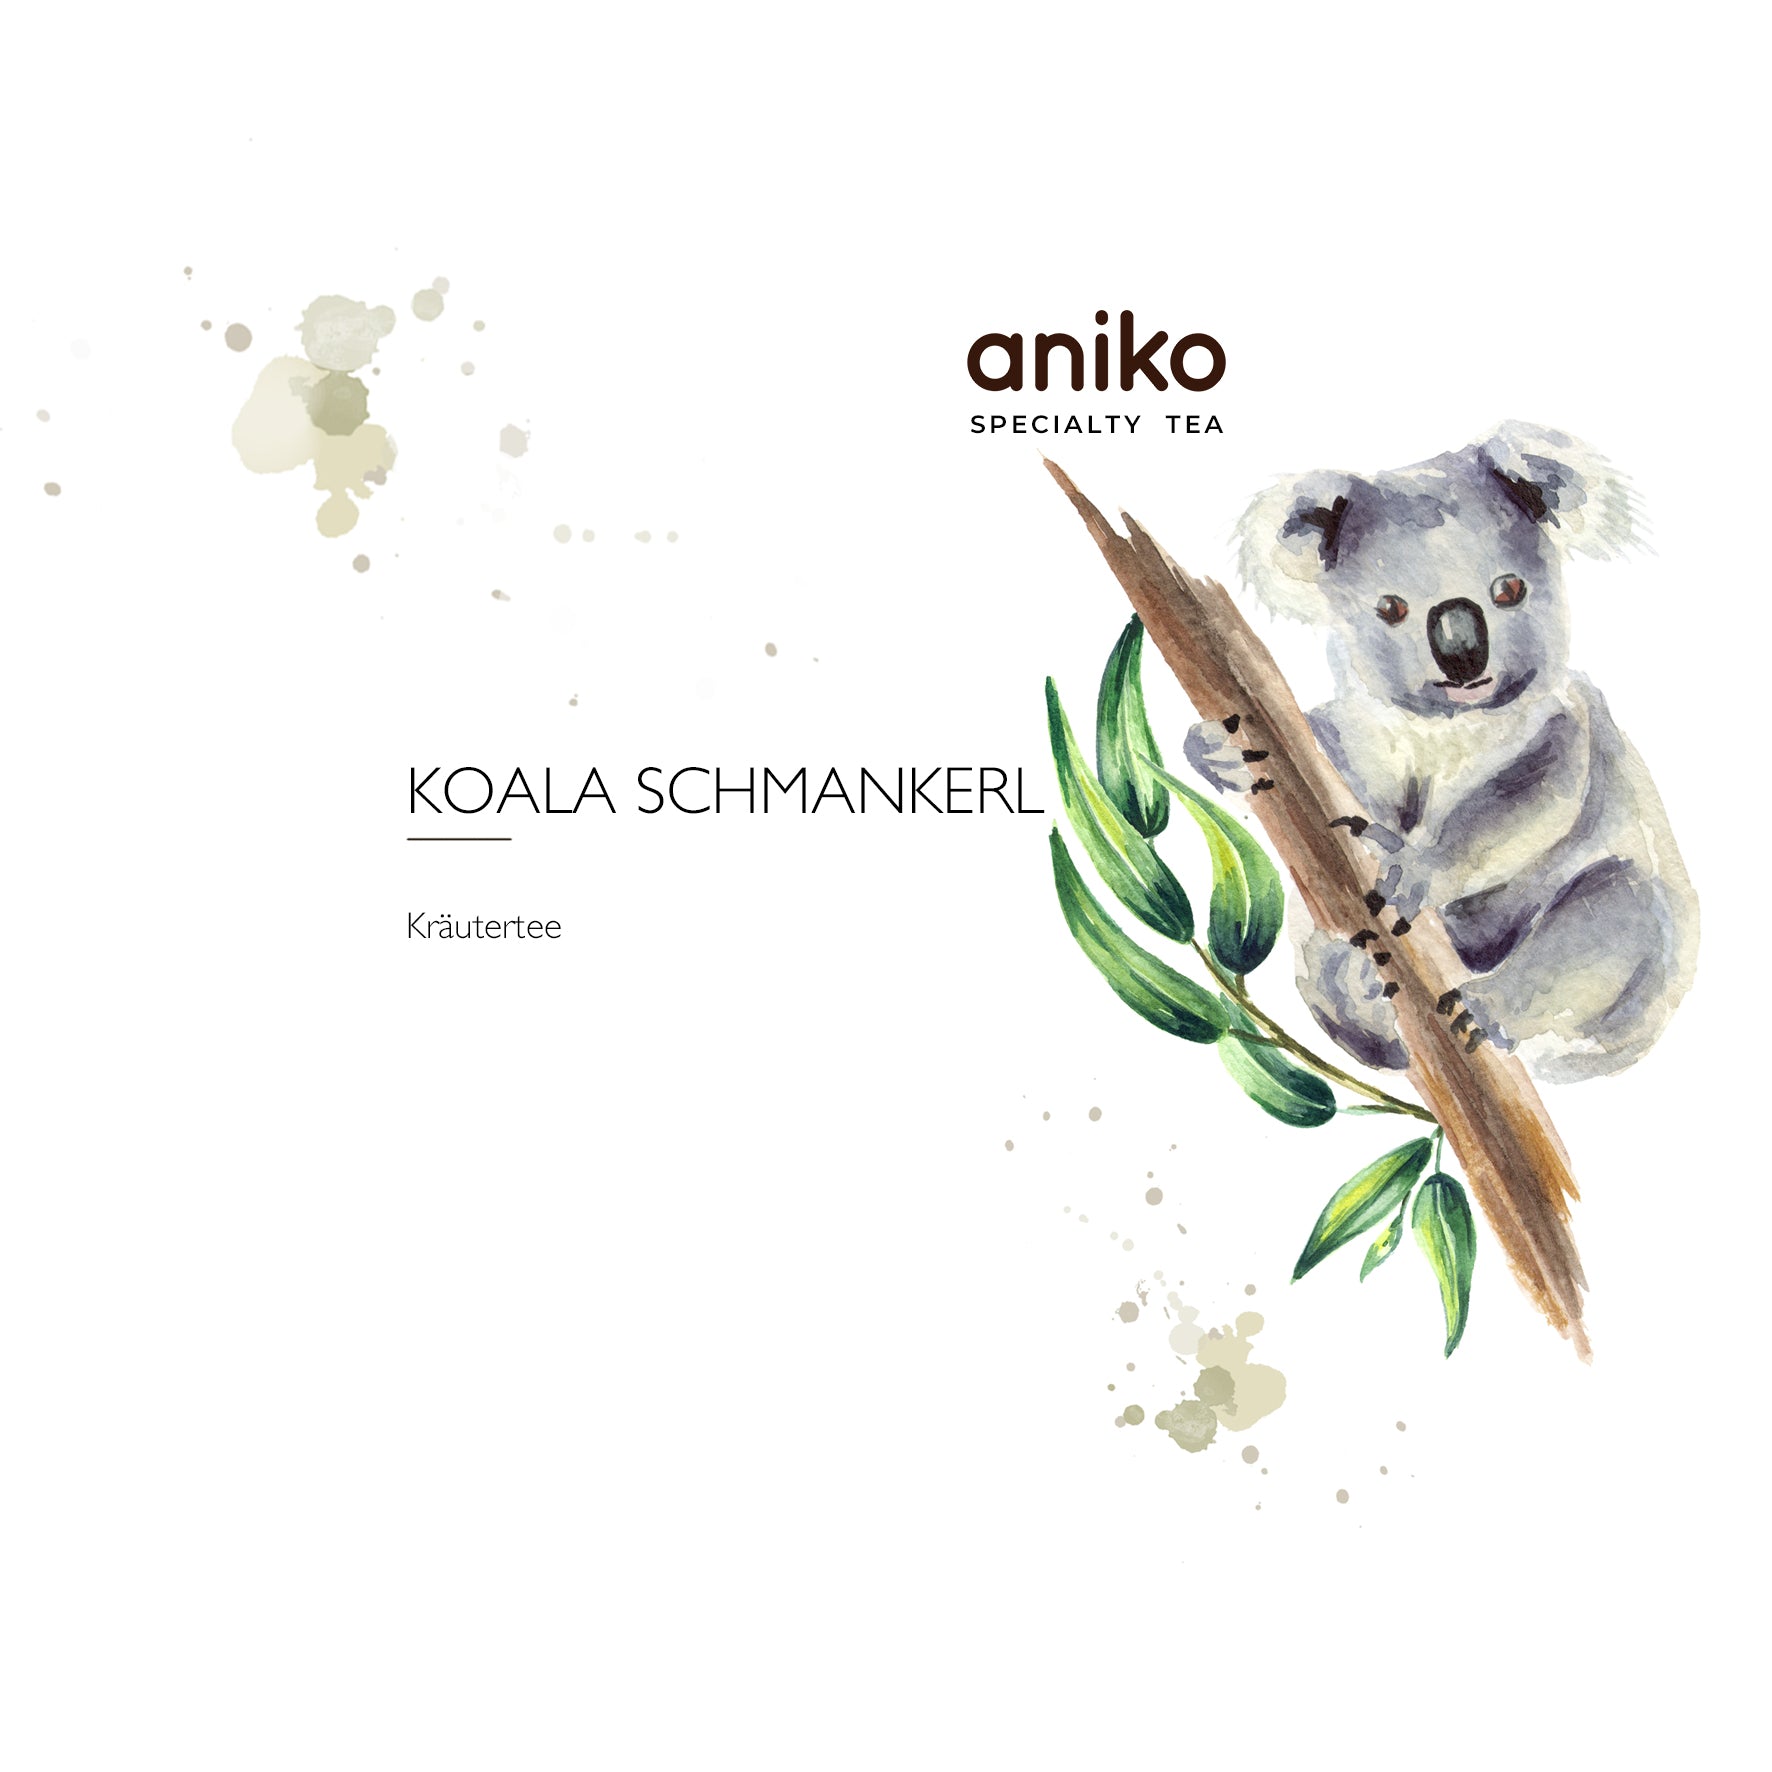 aniko Specialty Tea | KOALA SCHMANKERL